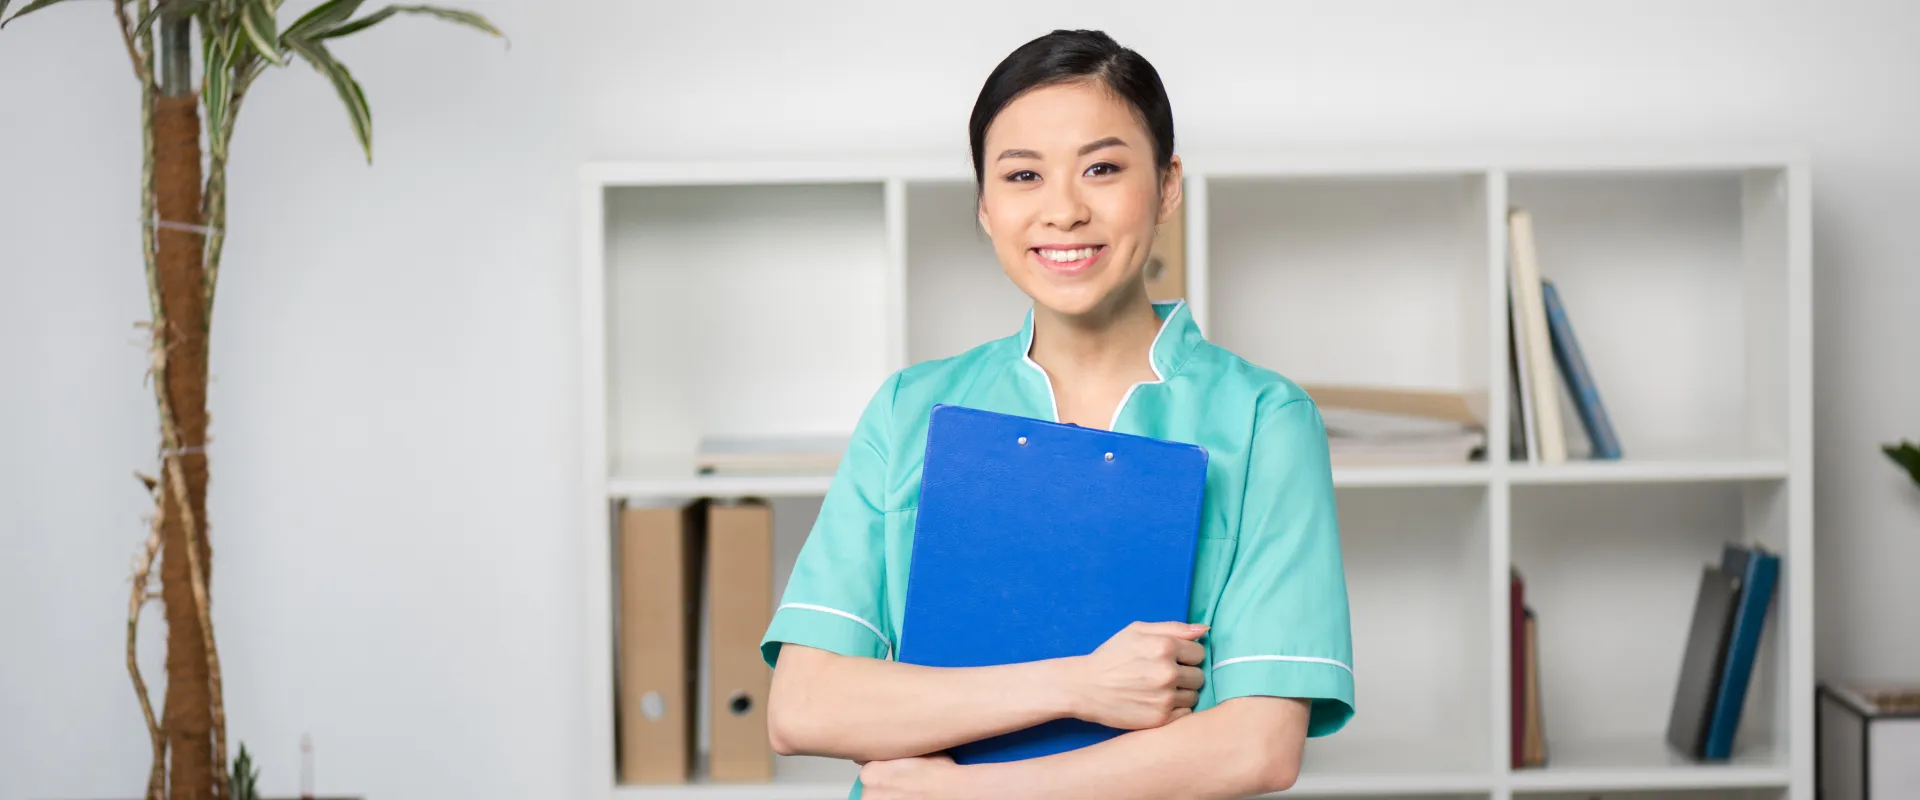 How to Start a Career as a Nurse?